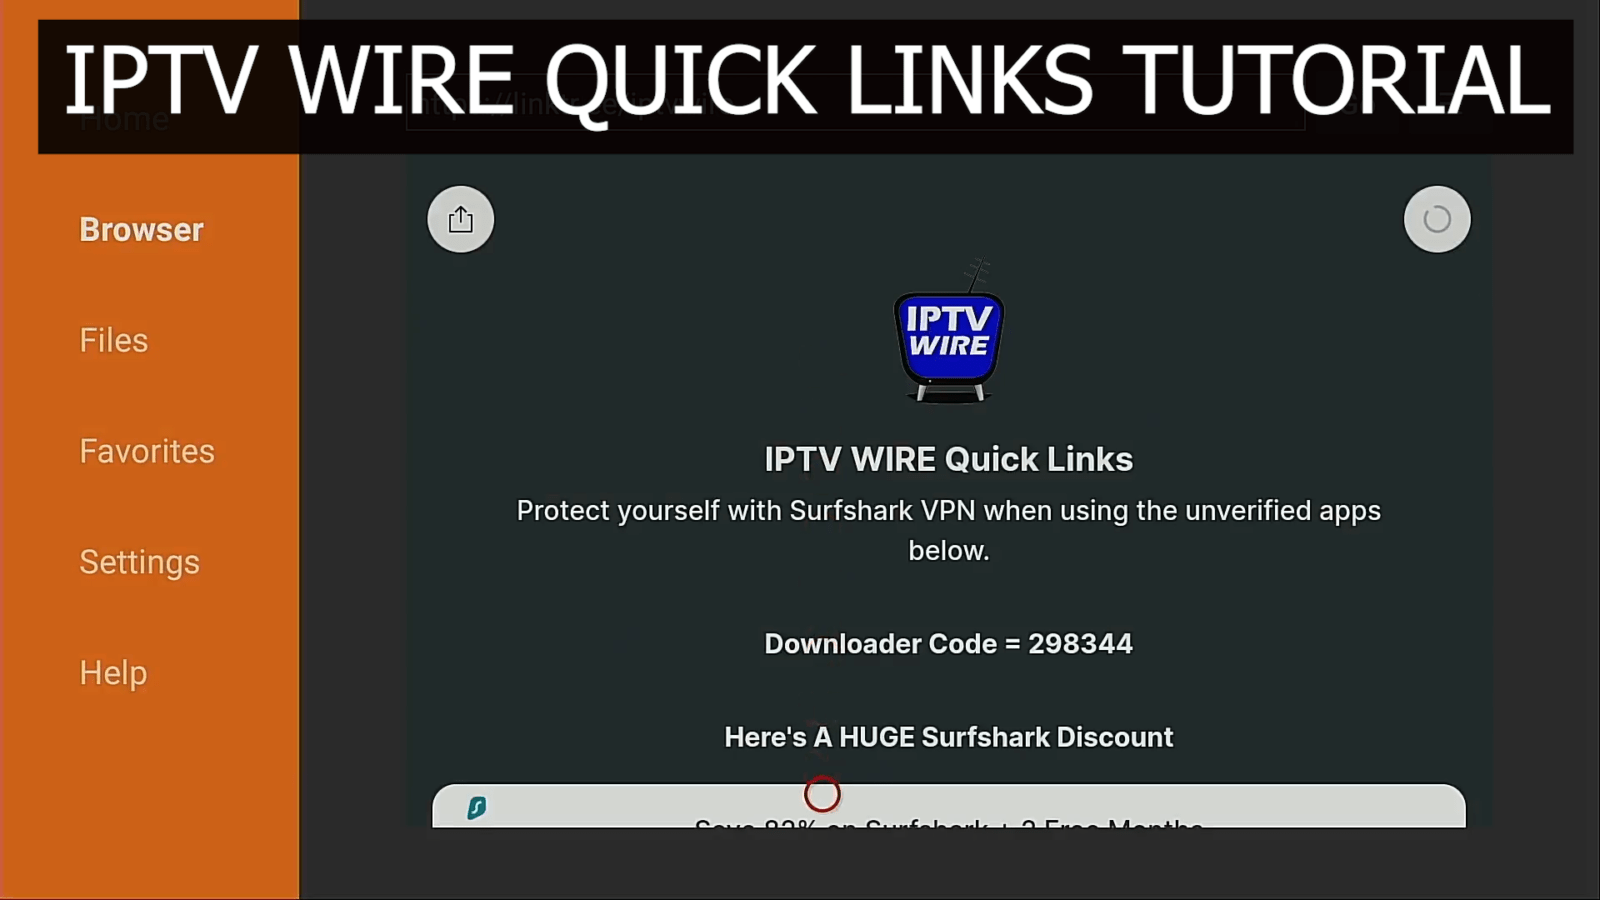 IPTV Quick Links Tutorial